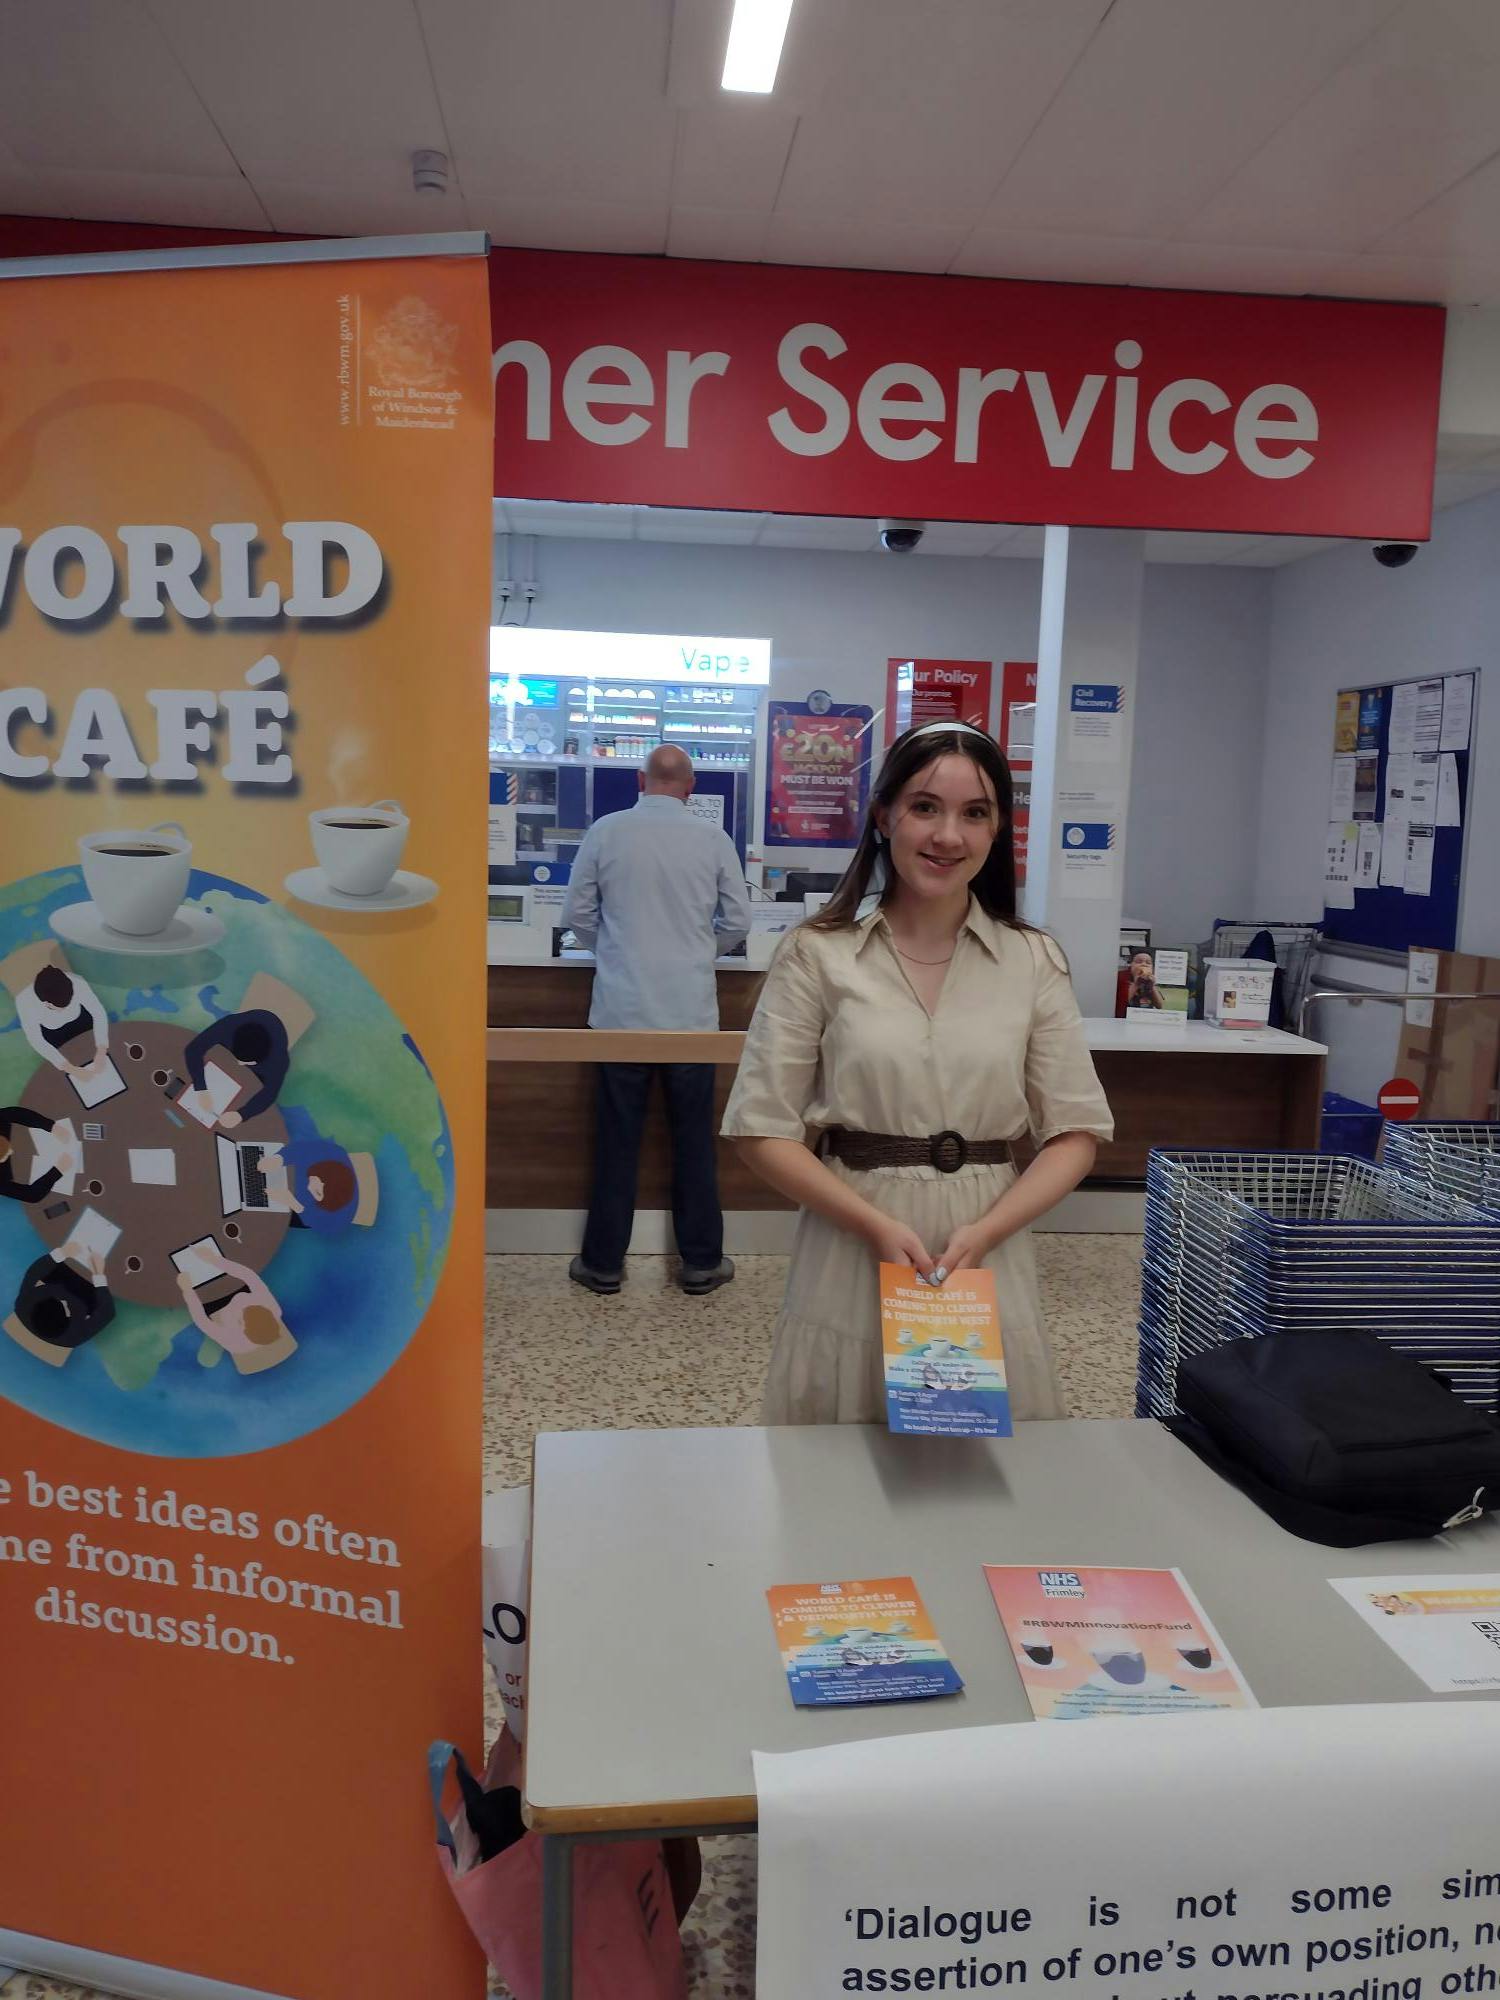 World Cafe Information Stand at Tesco Dedworth